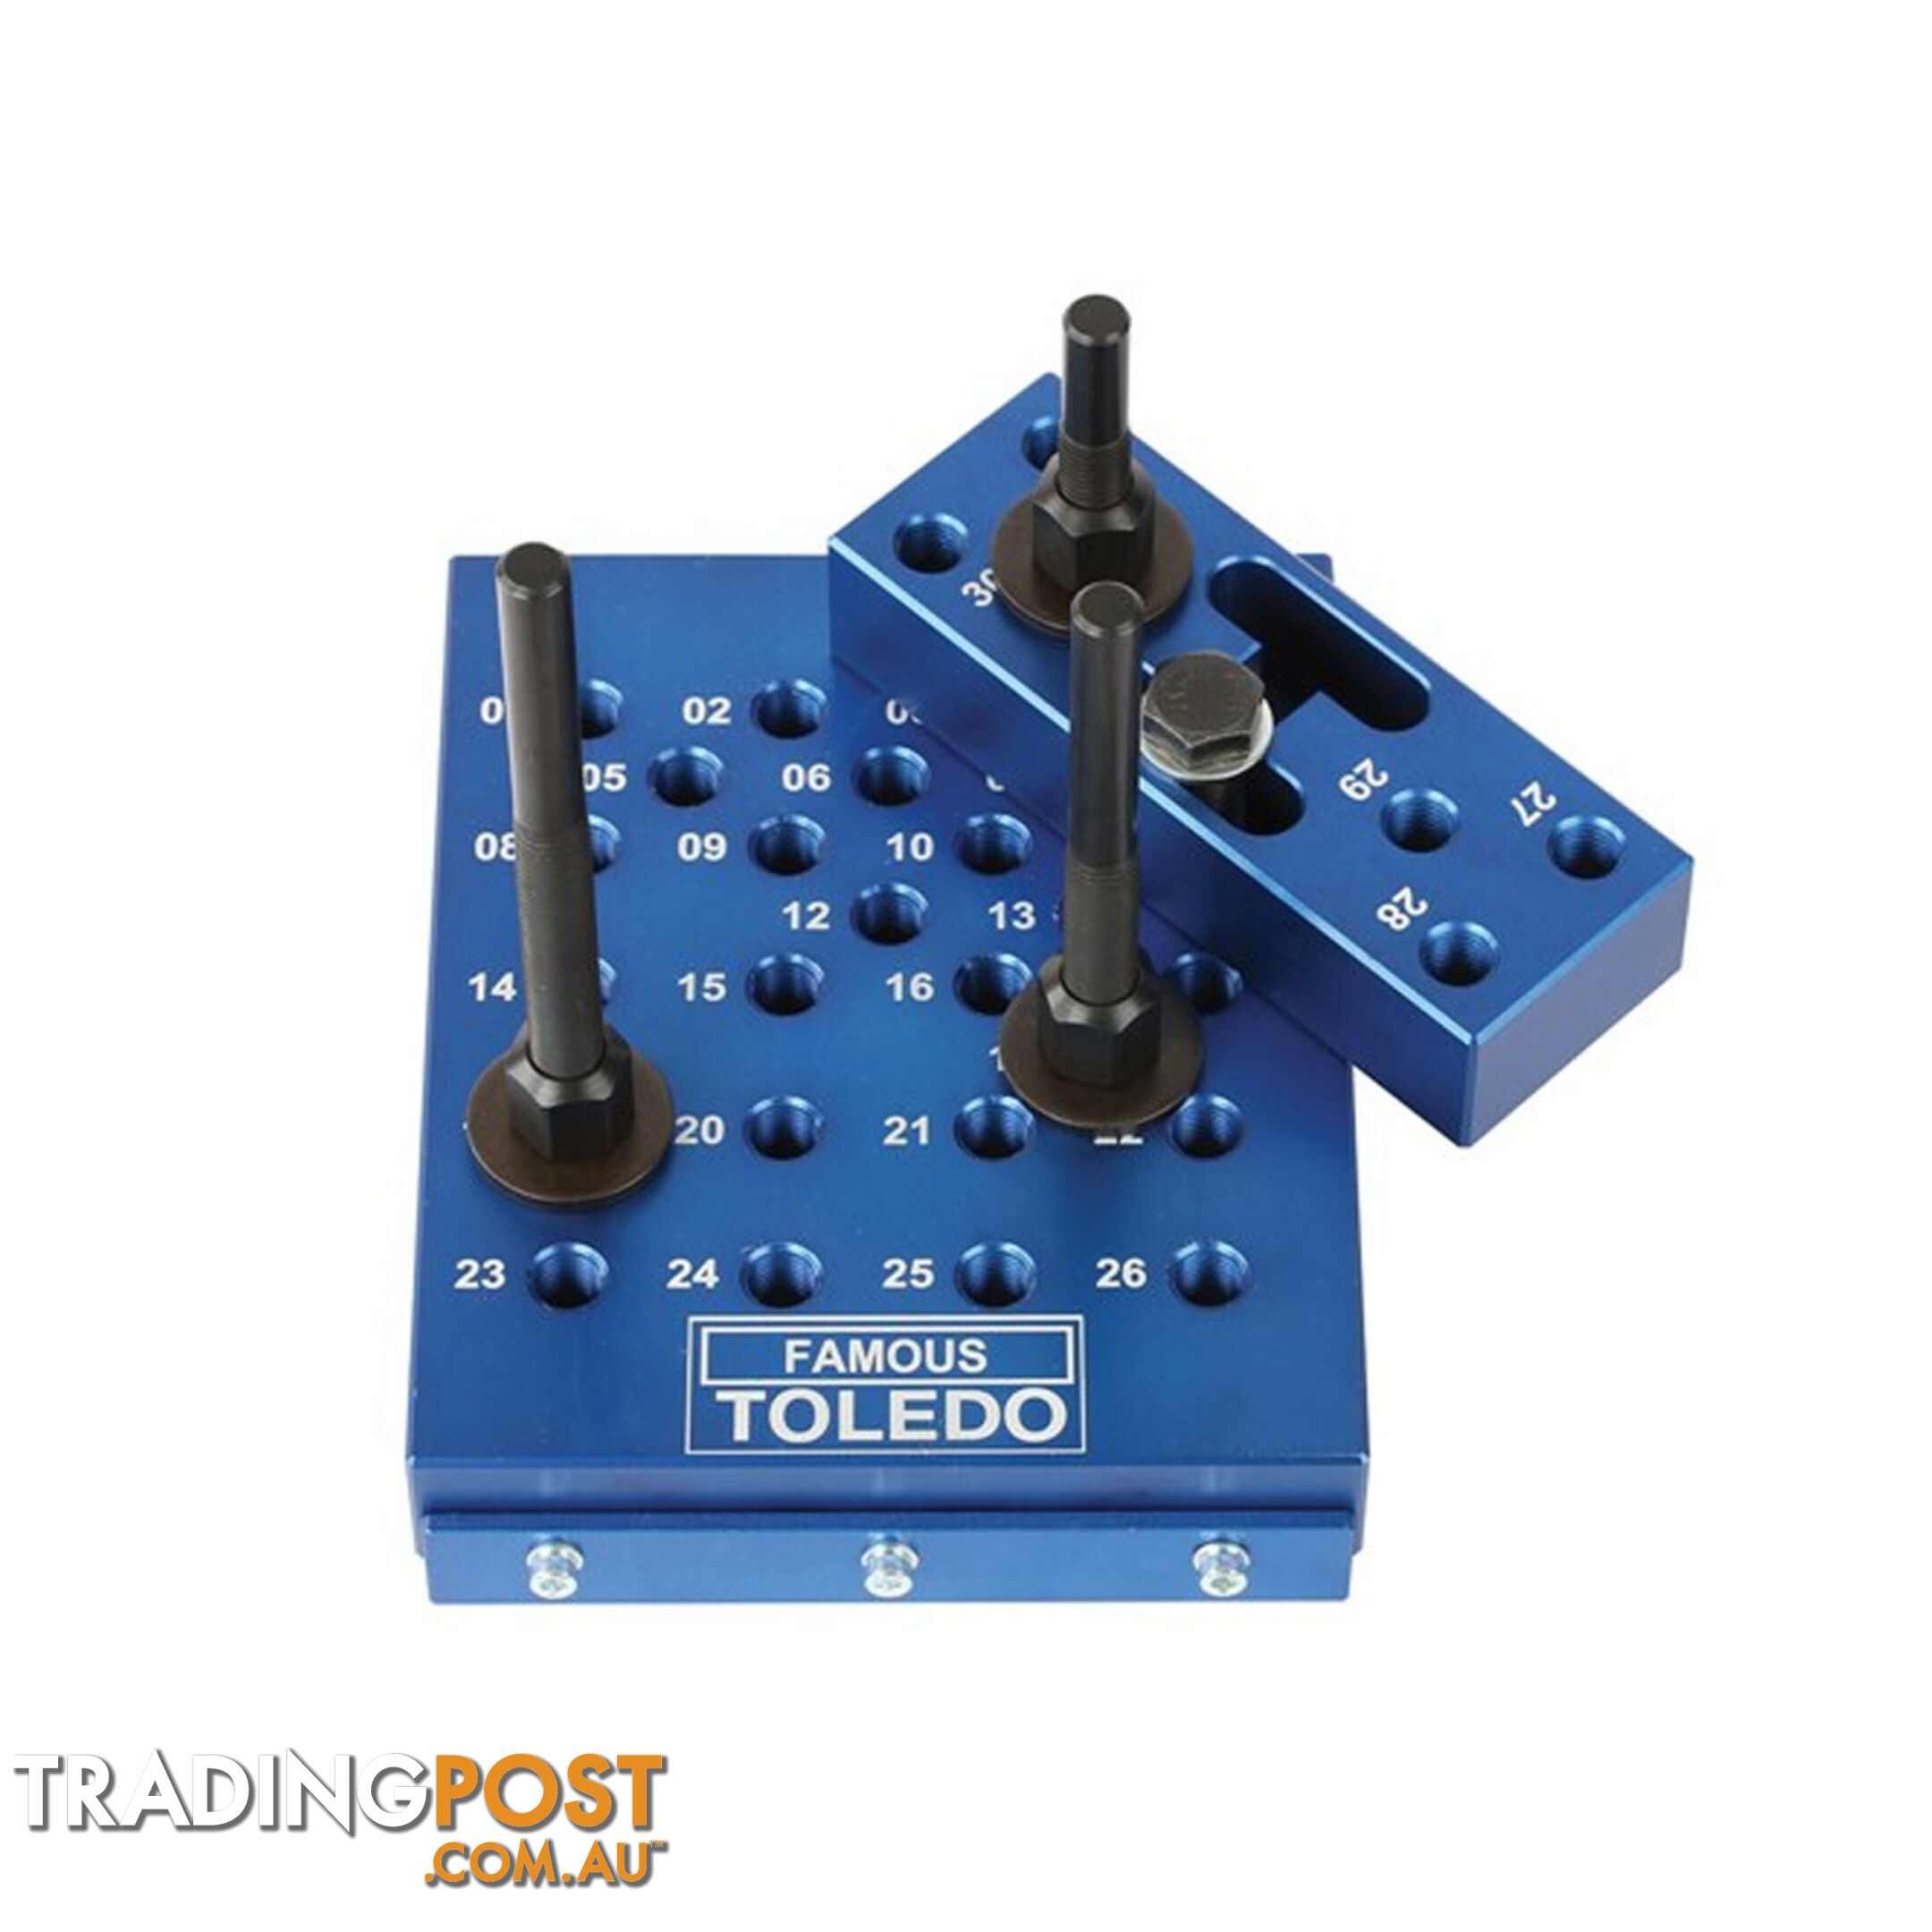 Toledo Universal Press Support Tool SKU - 311021